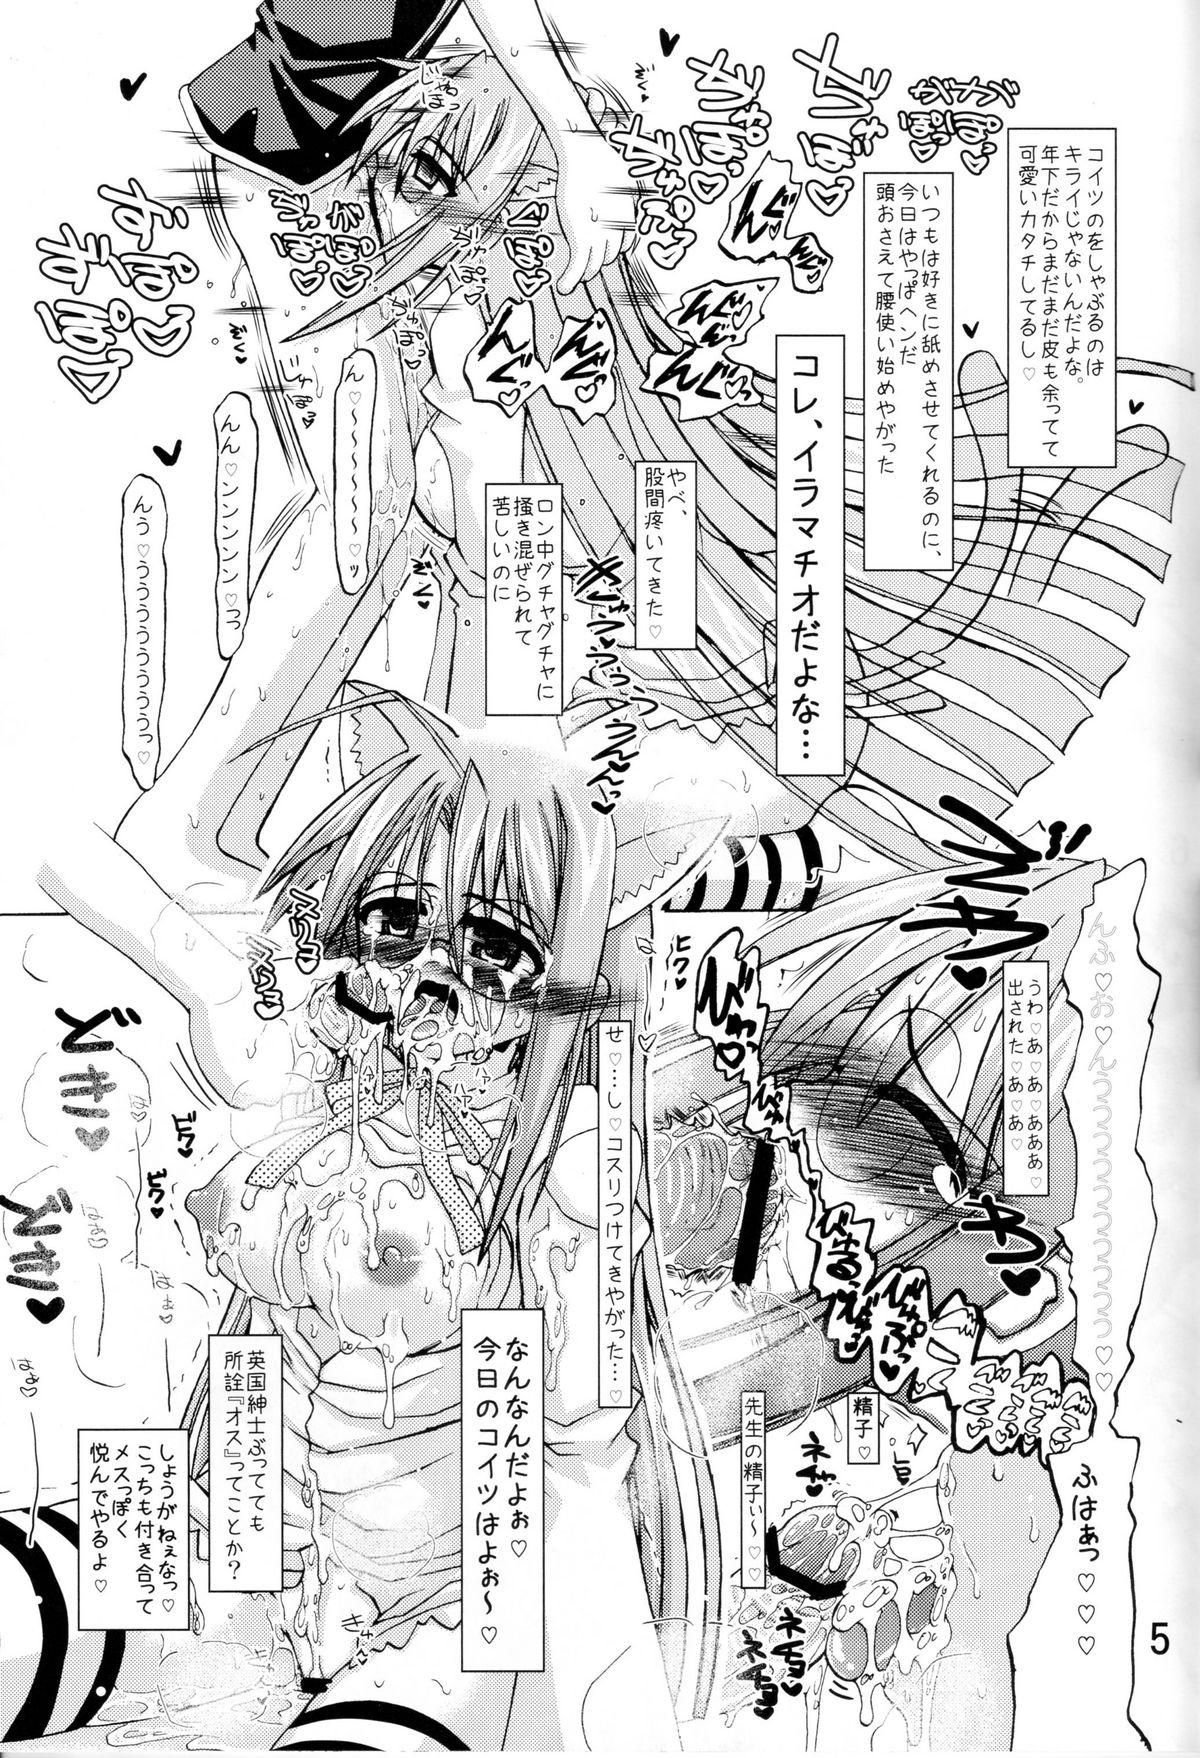 Beard TRI GIRL - Mahou sensei negima New - Page 5